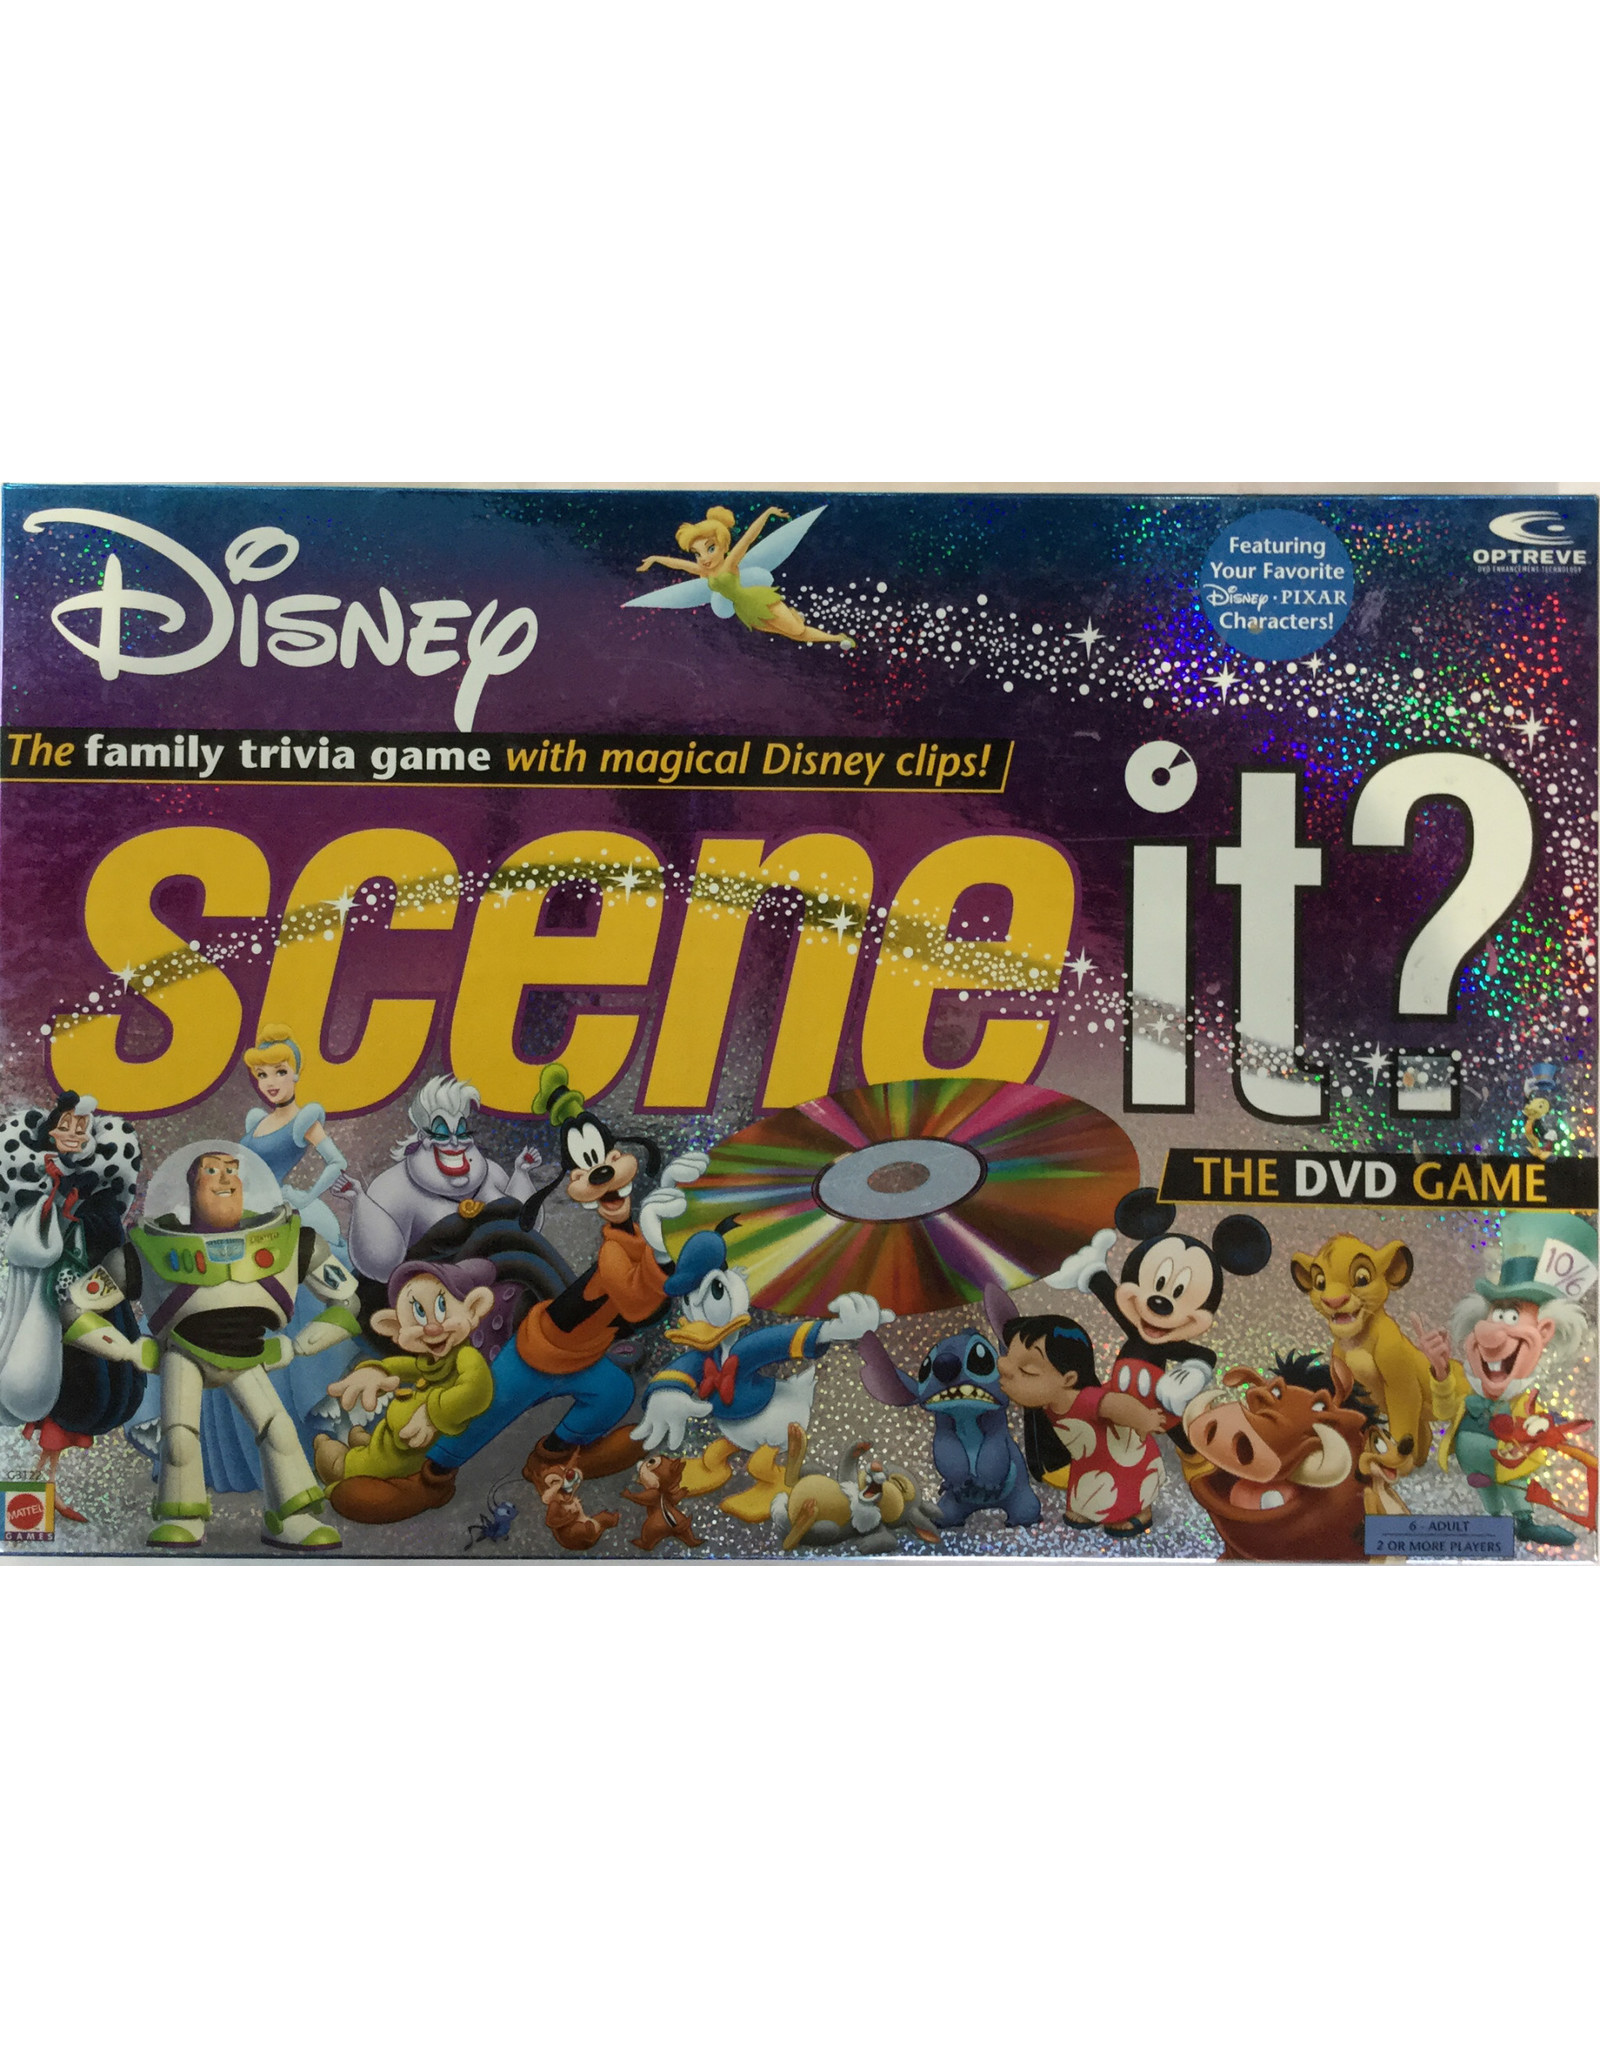 Mattel Scene it? Disney DVD Game (2004)